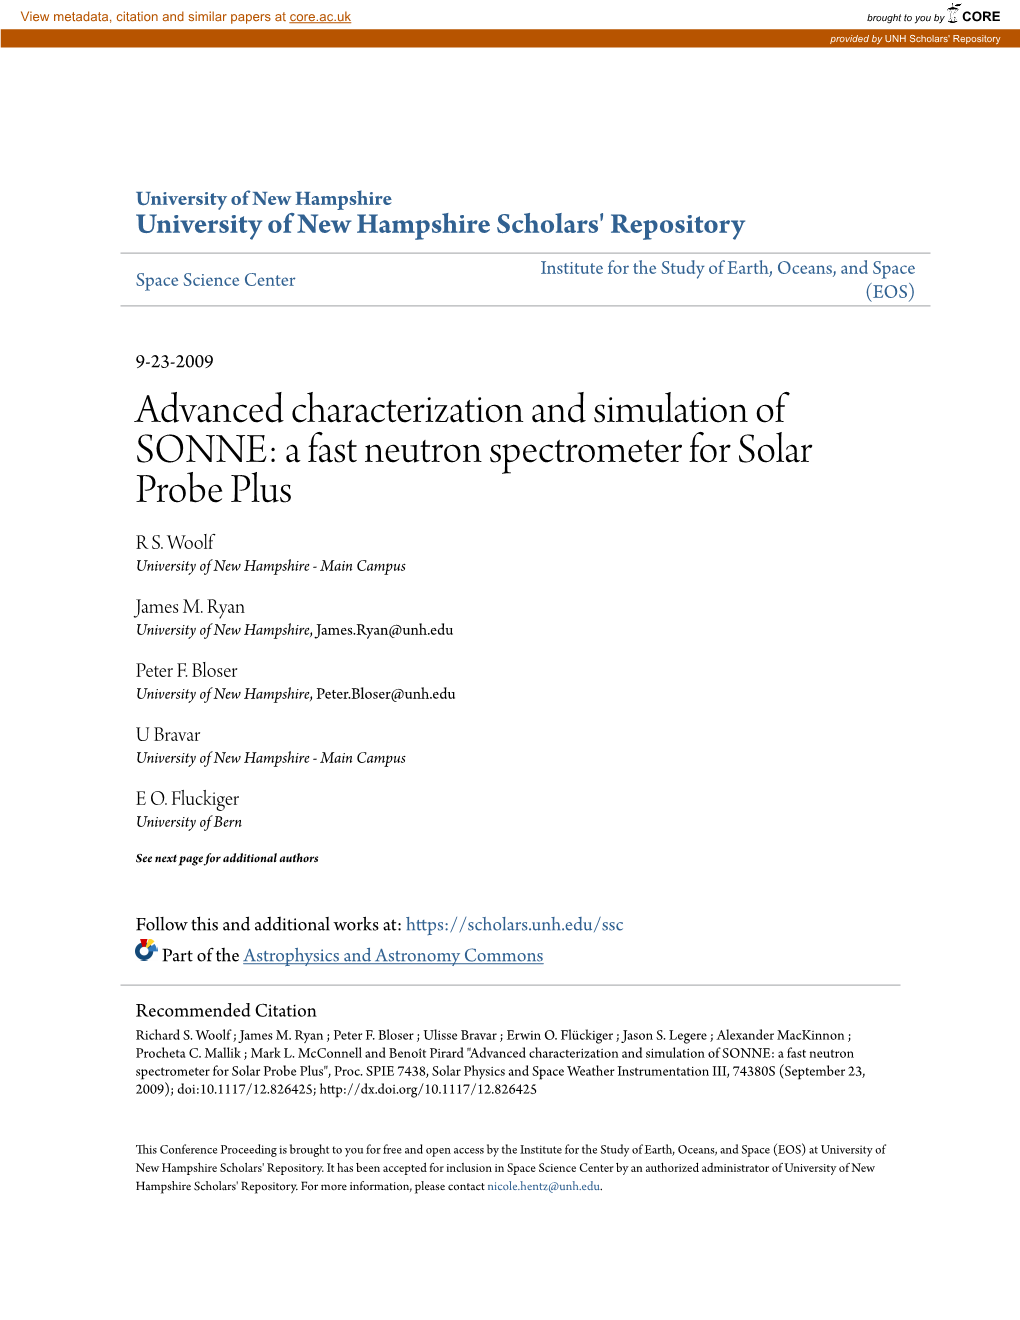 A Fast Neutron Spectrometer for Solar Probe Plus R S